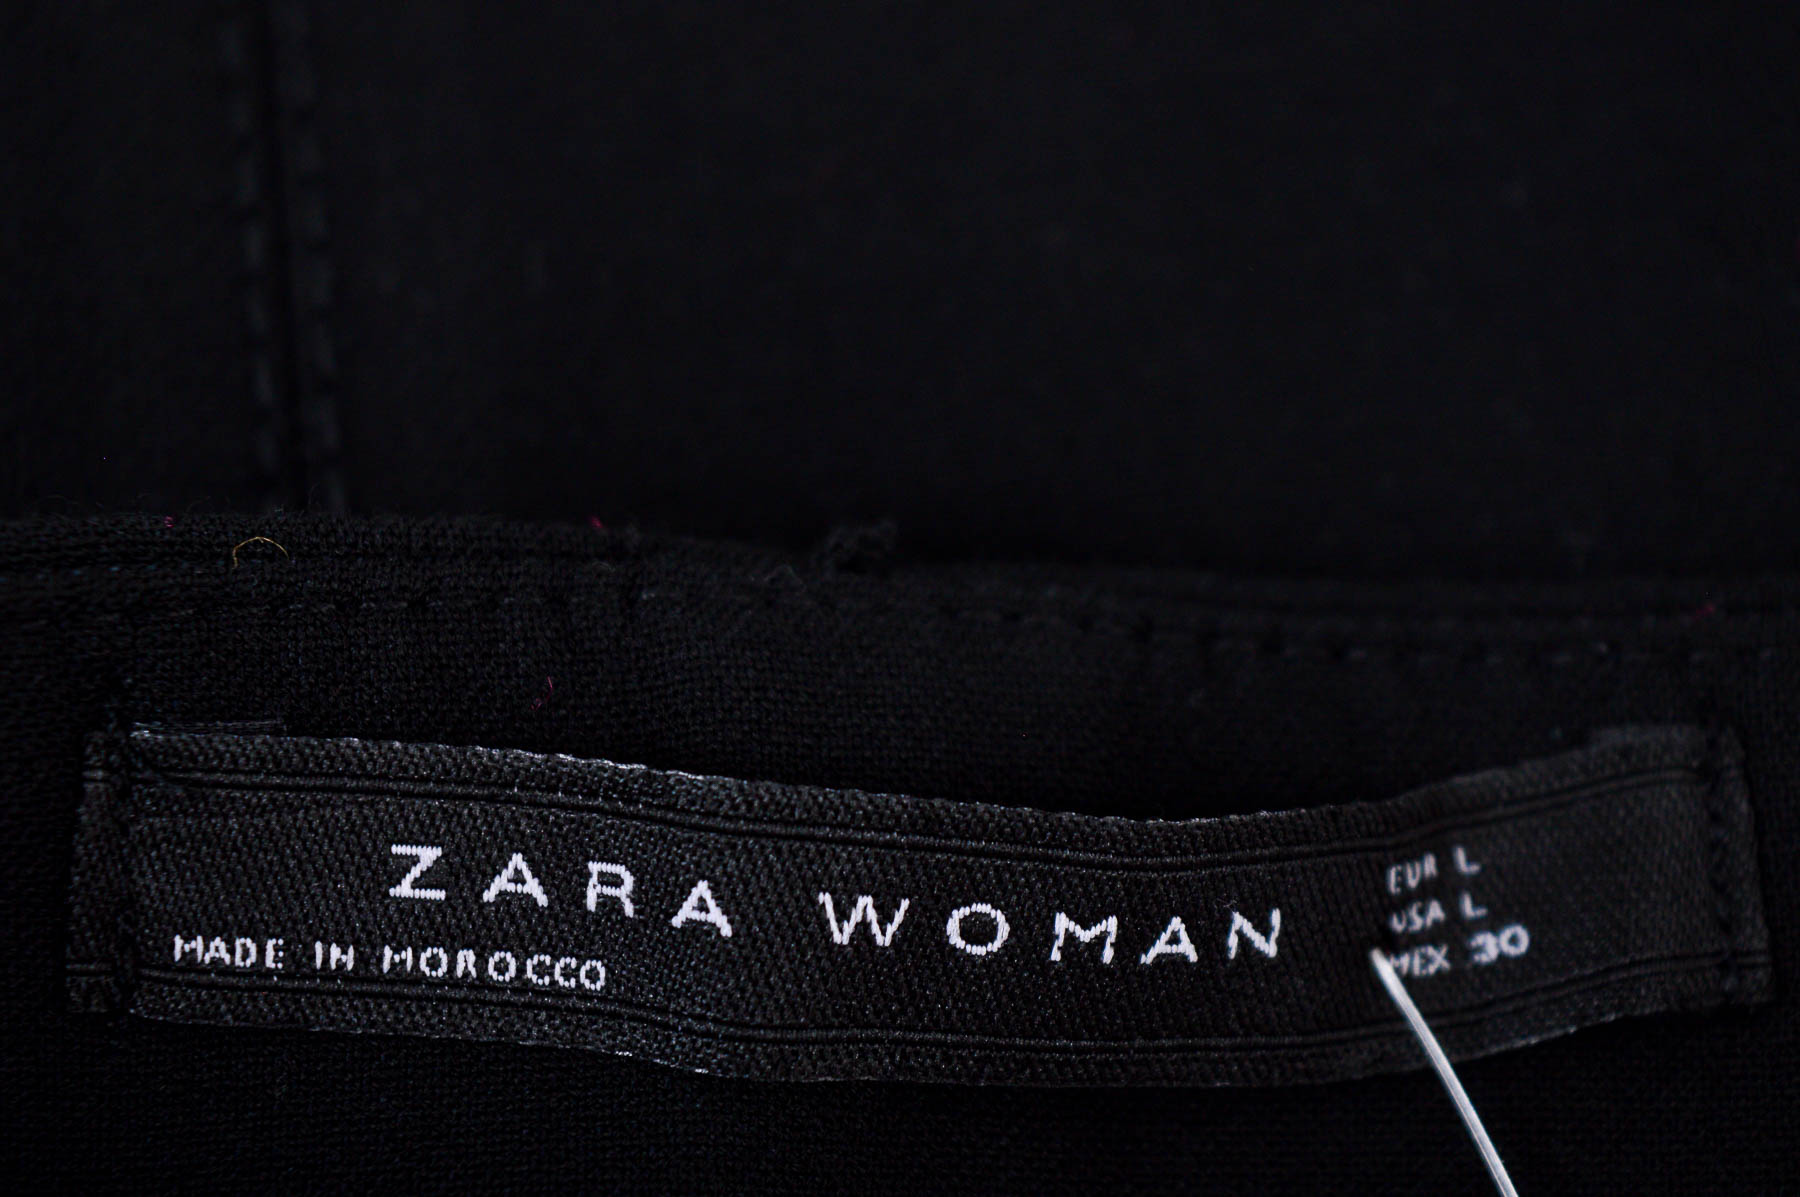 Spódnica - ZARA Woman - 2